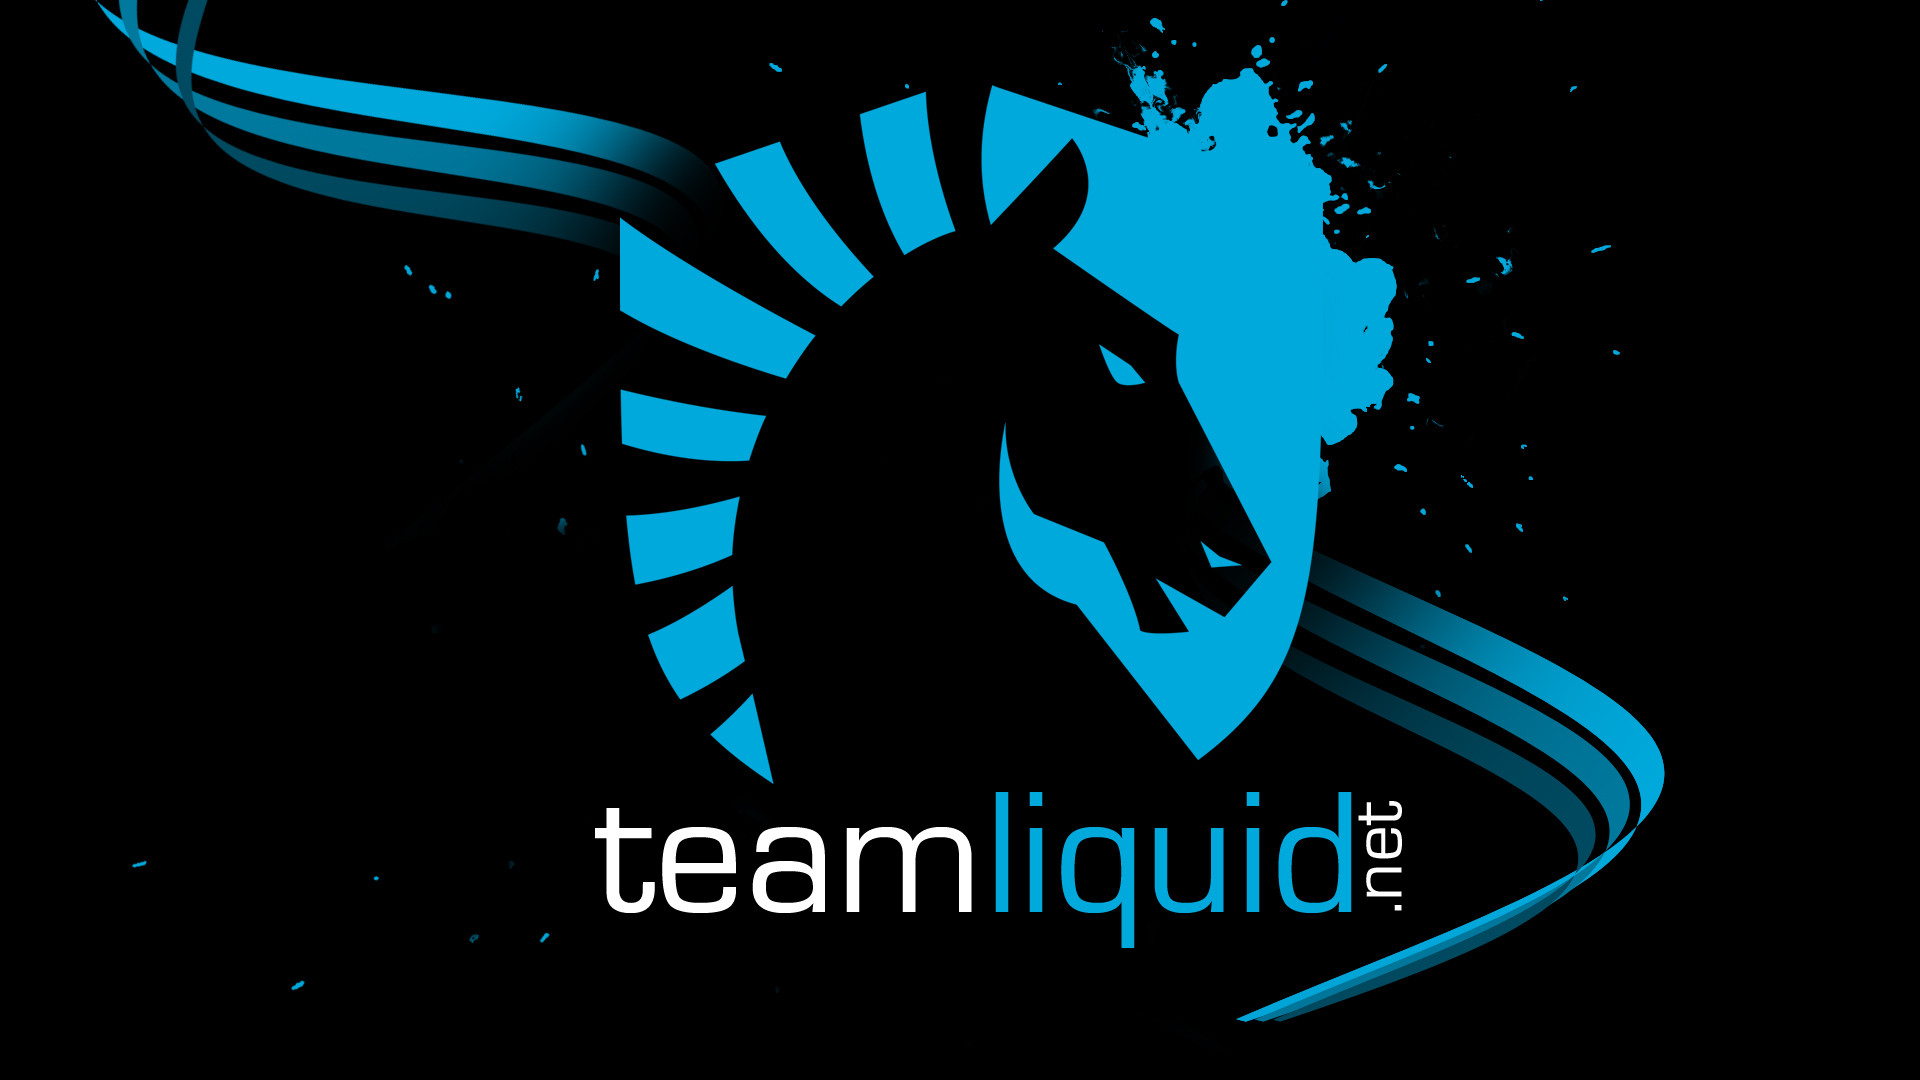 Team Liquid wallpaper